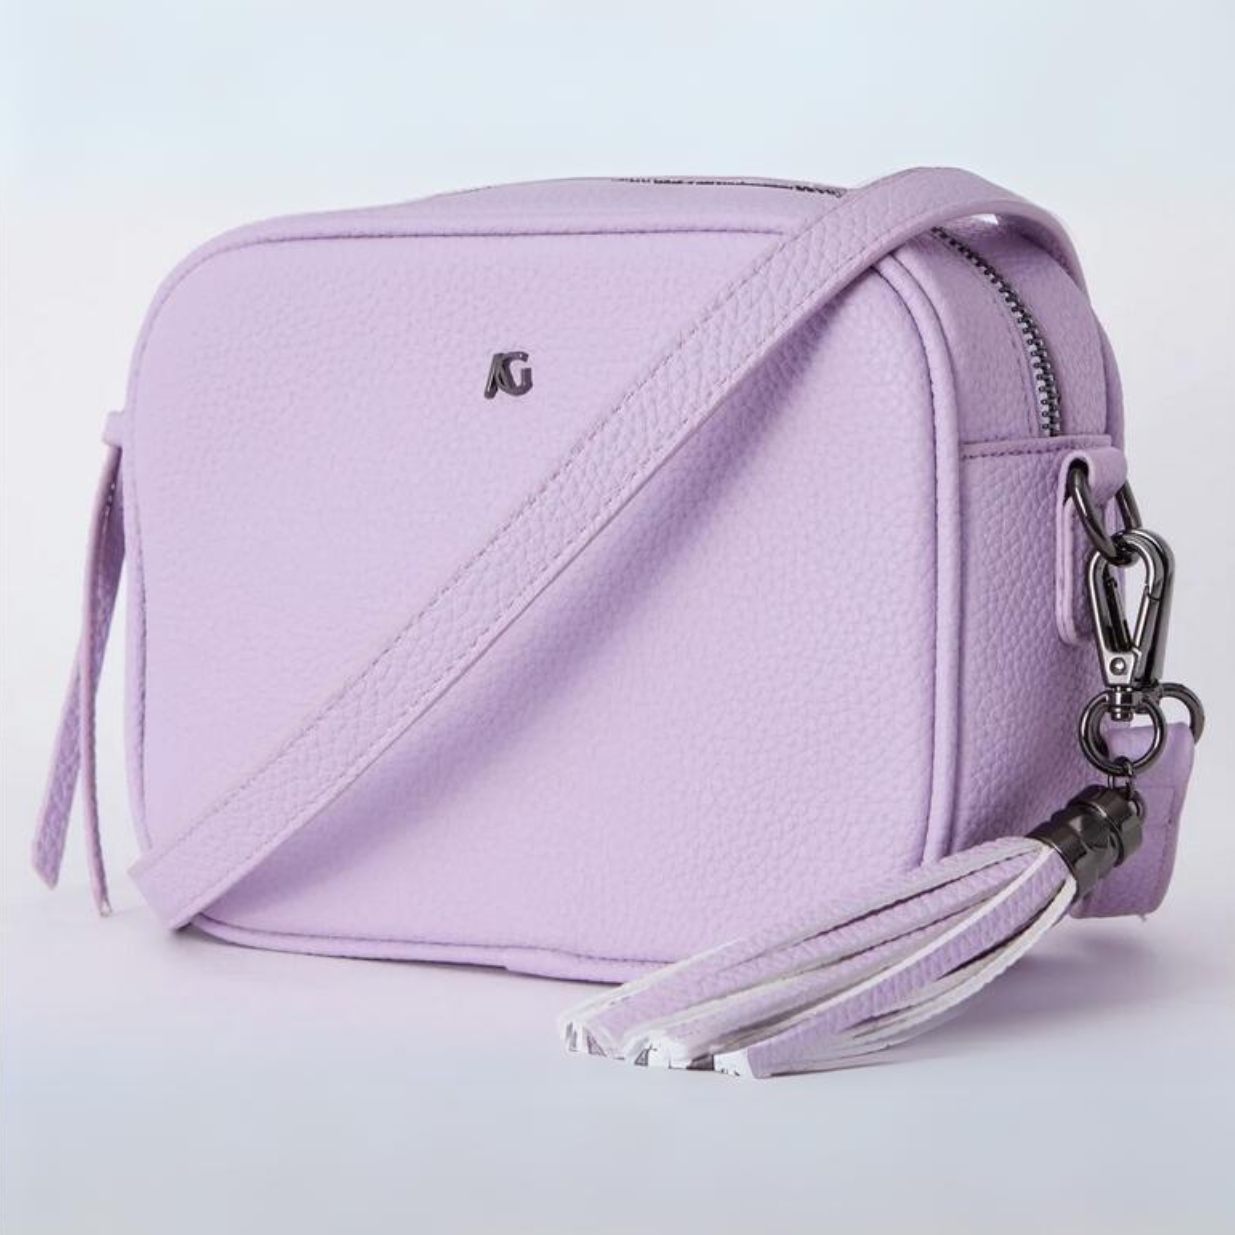 Lilac Crossbody Bag